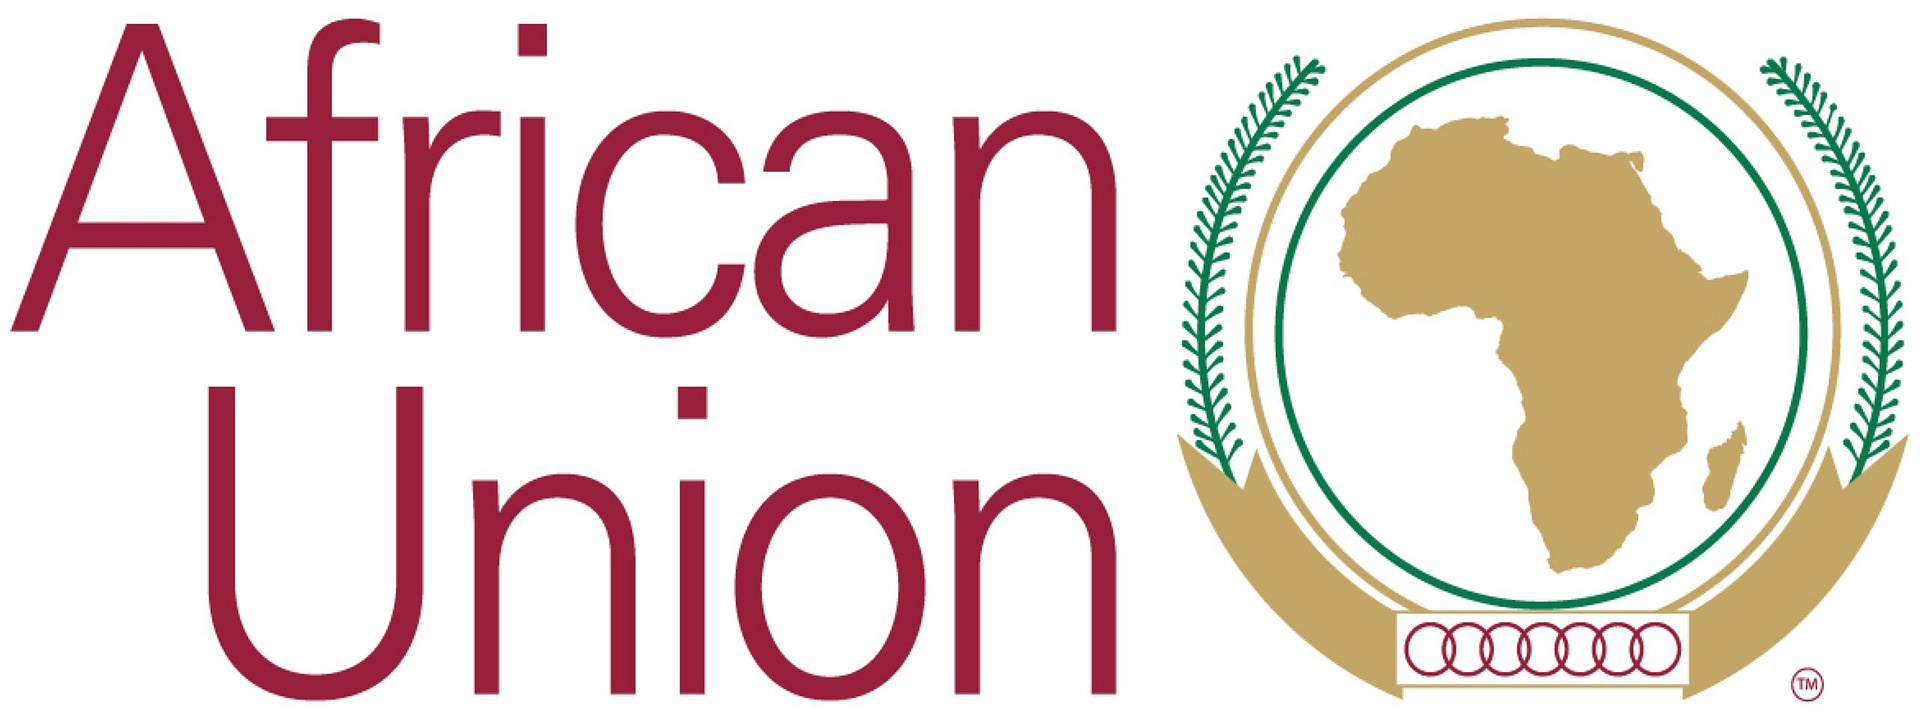 african-union-logo